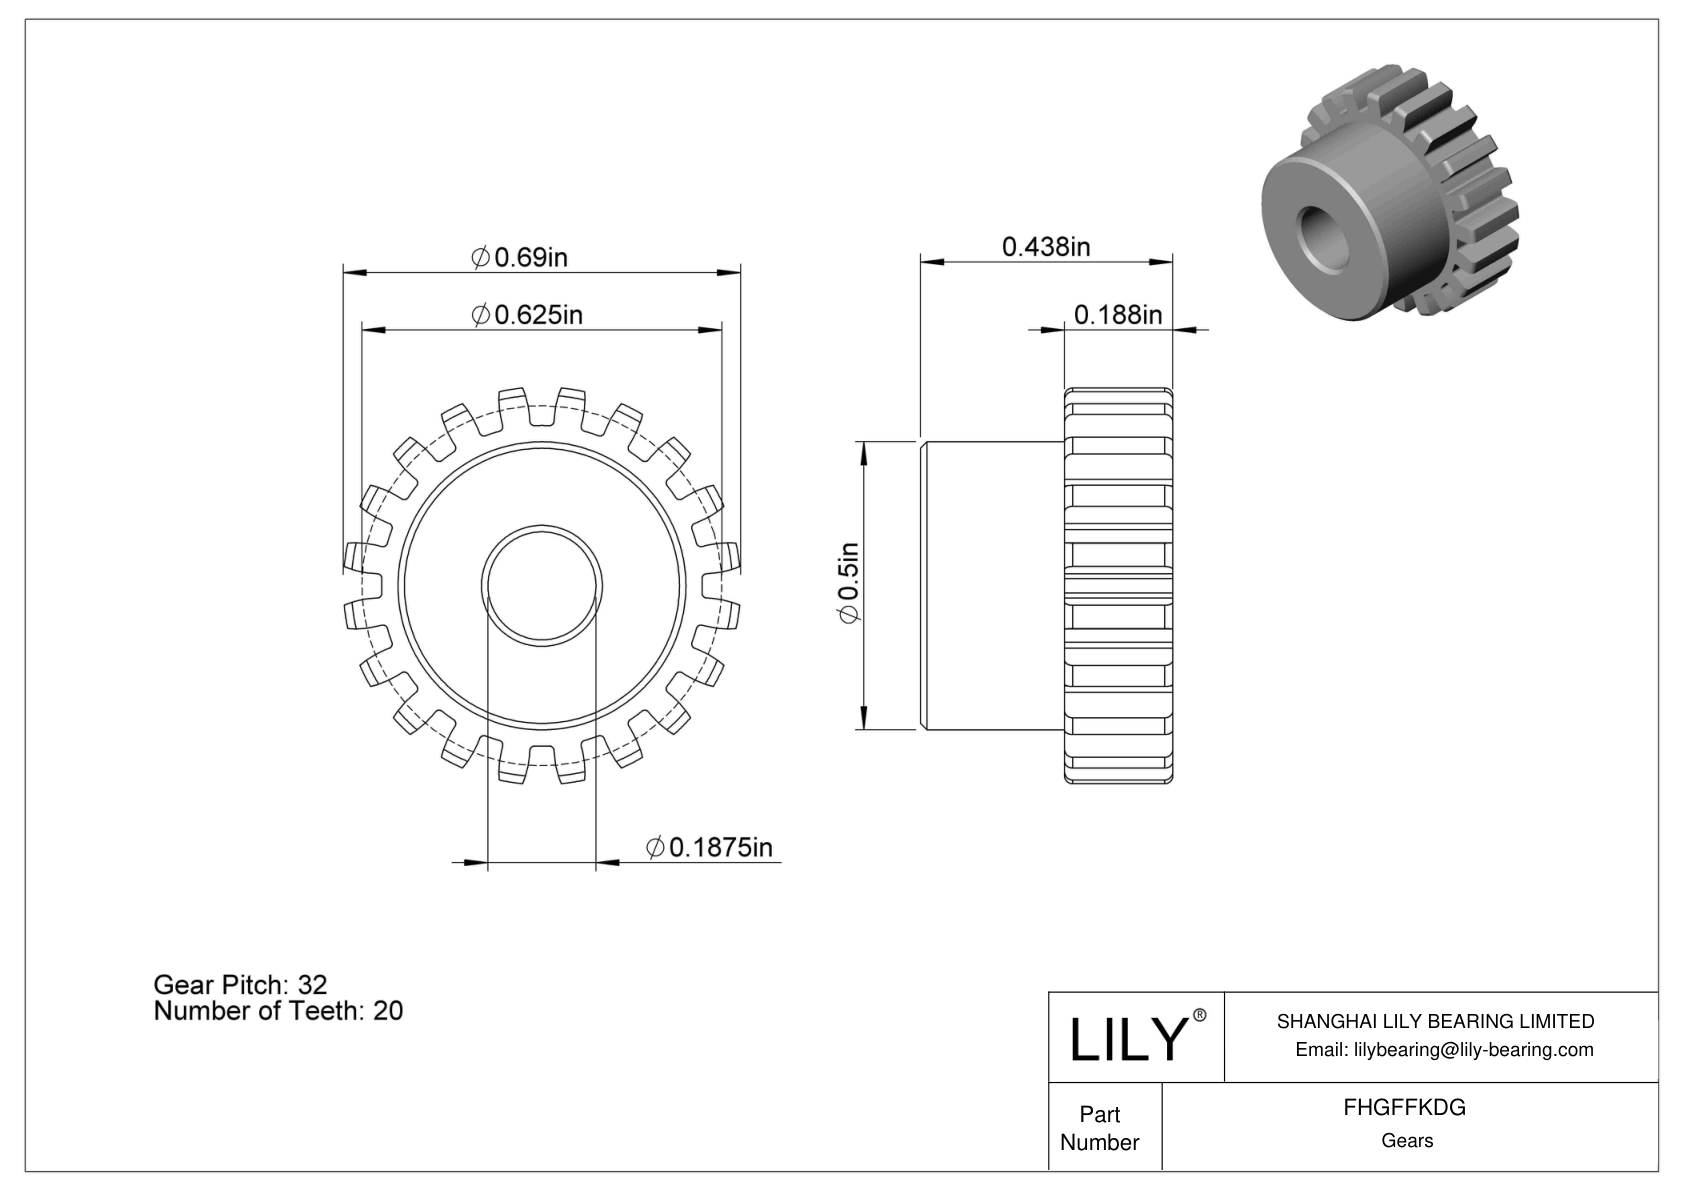 FHGFFKDG Plastic Gears - 14 1/2° Pressure Angle cad drawing